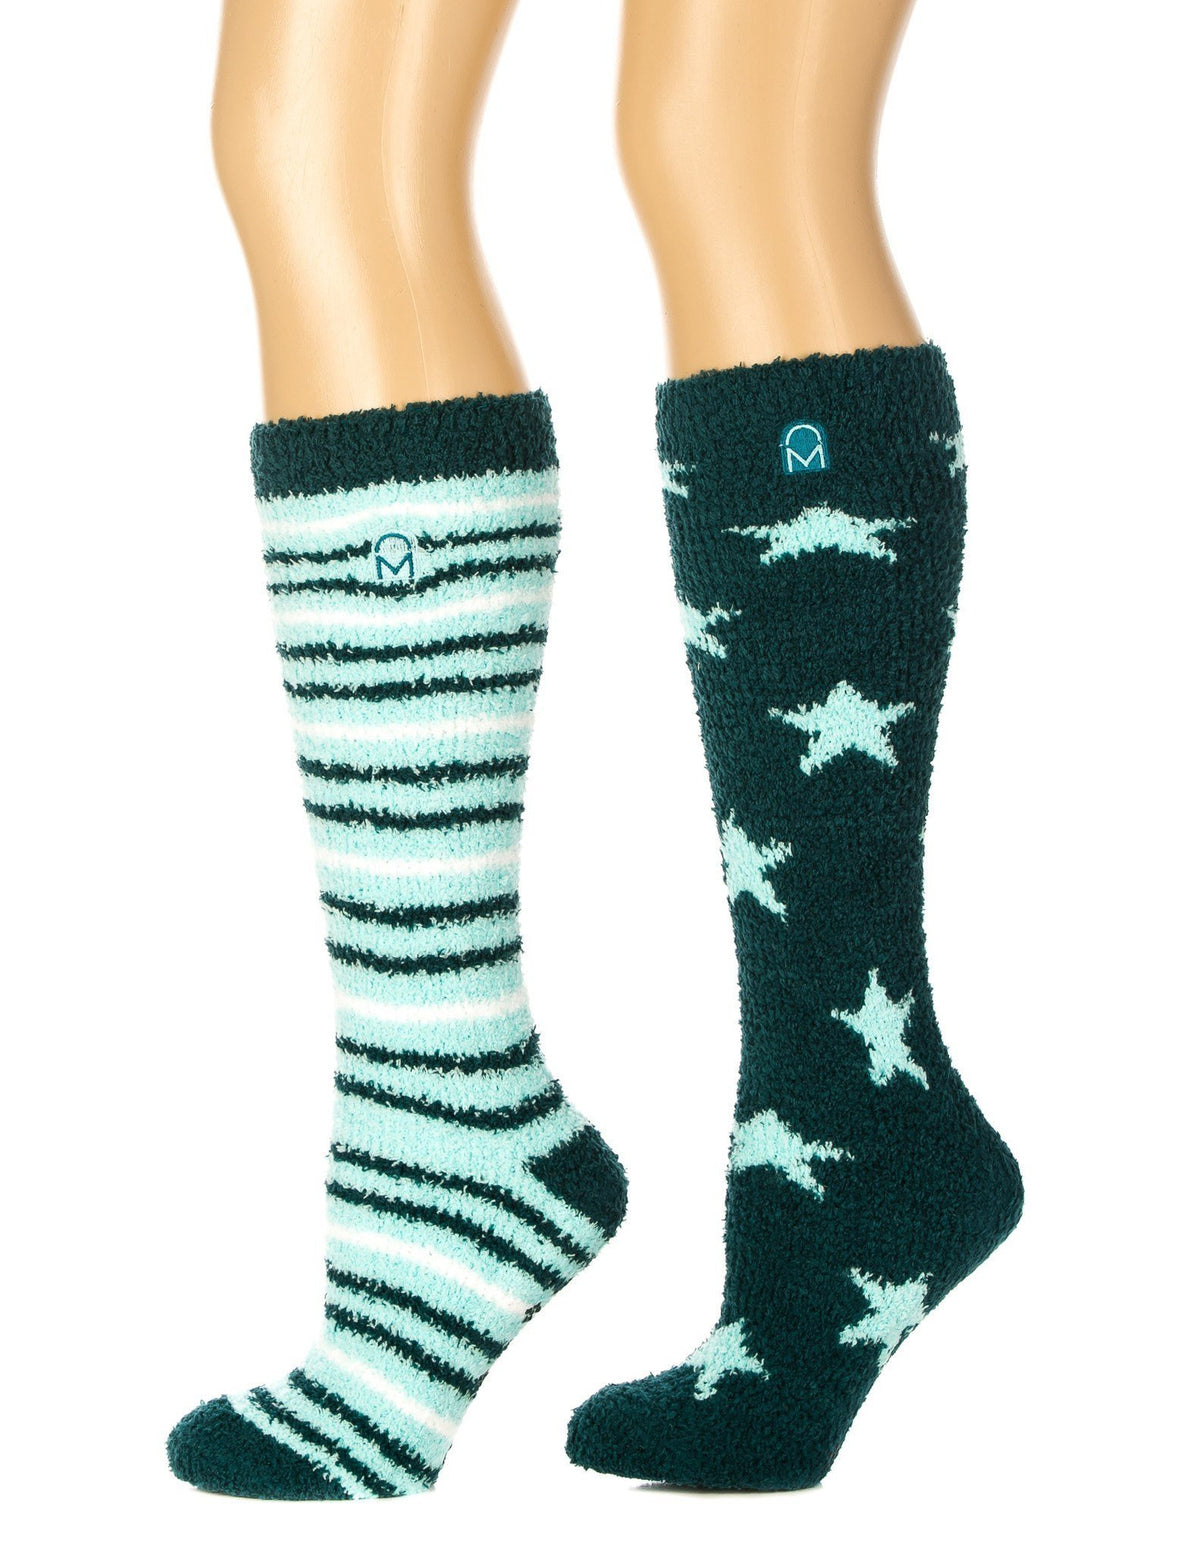 Women's (2 Pairs) Soft Anti-Skid Fuzzy Winter Knee High Socks - Set A2